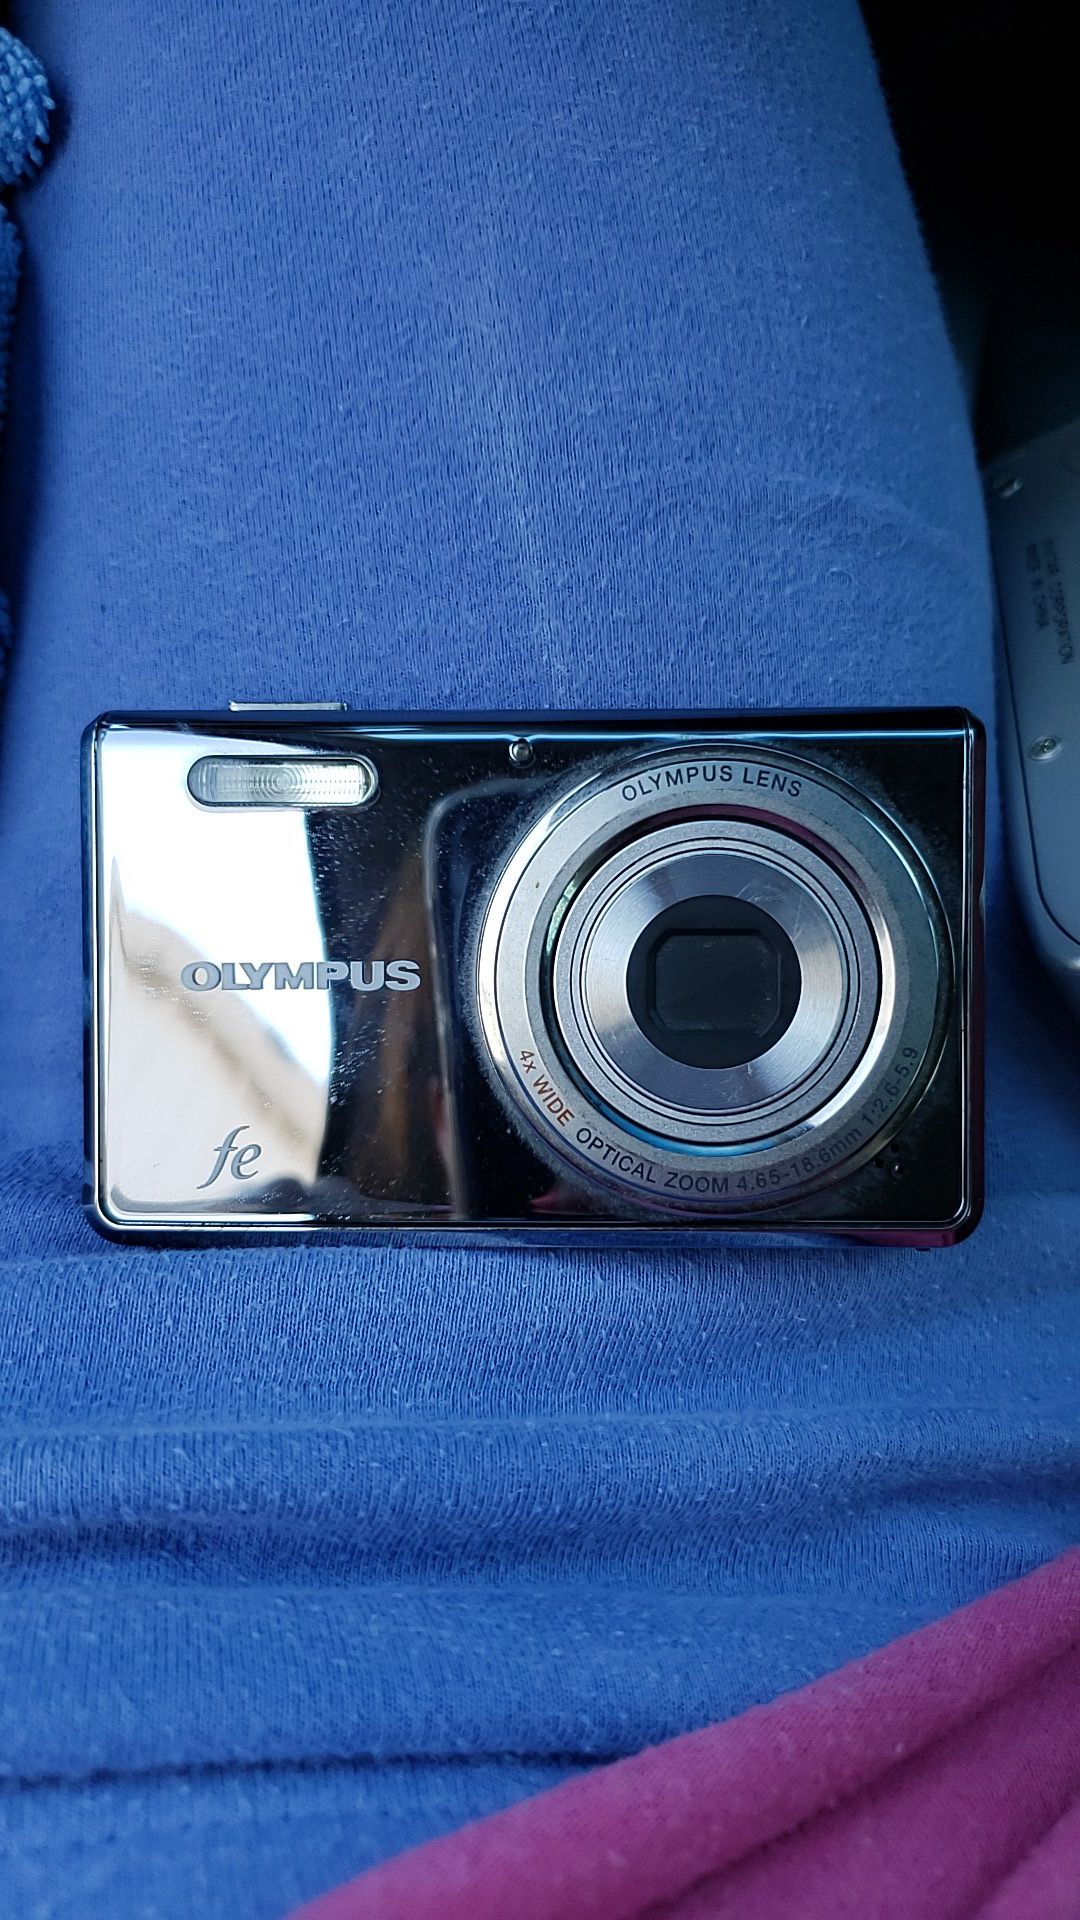 Olympus fe digital camera